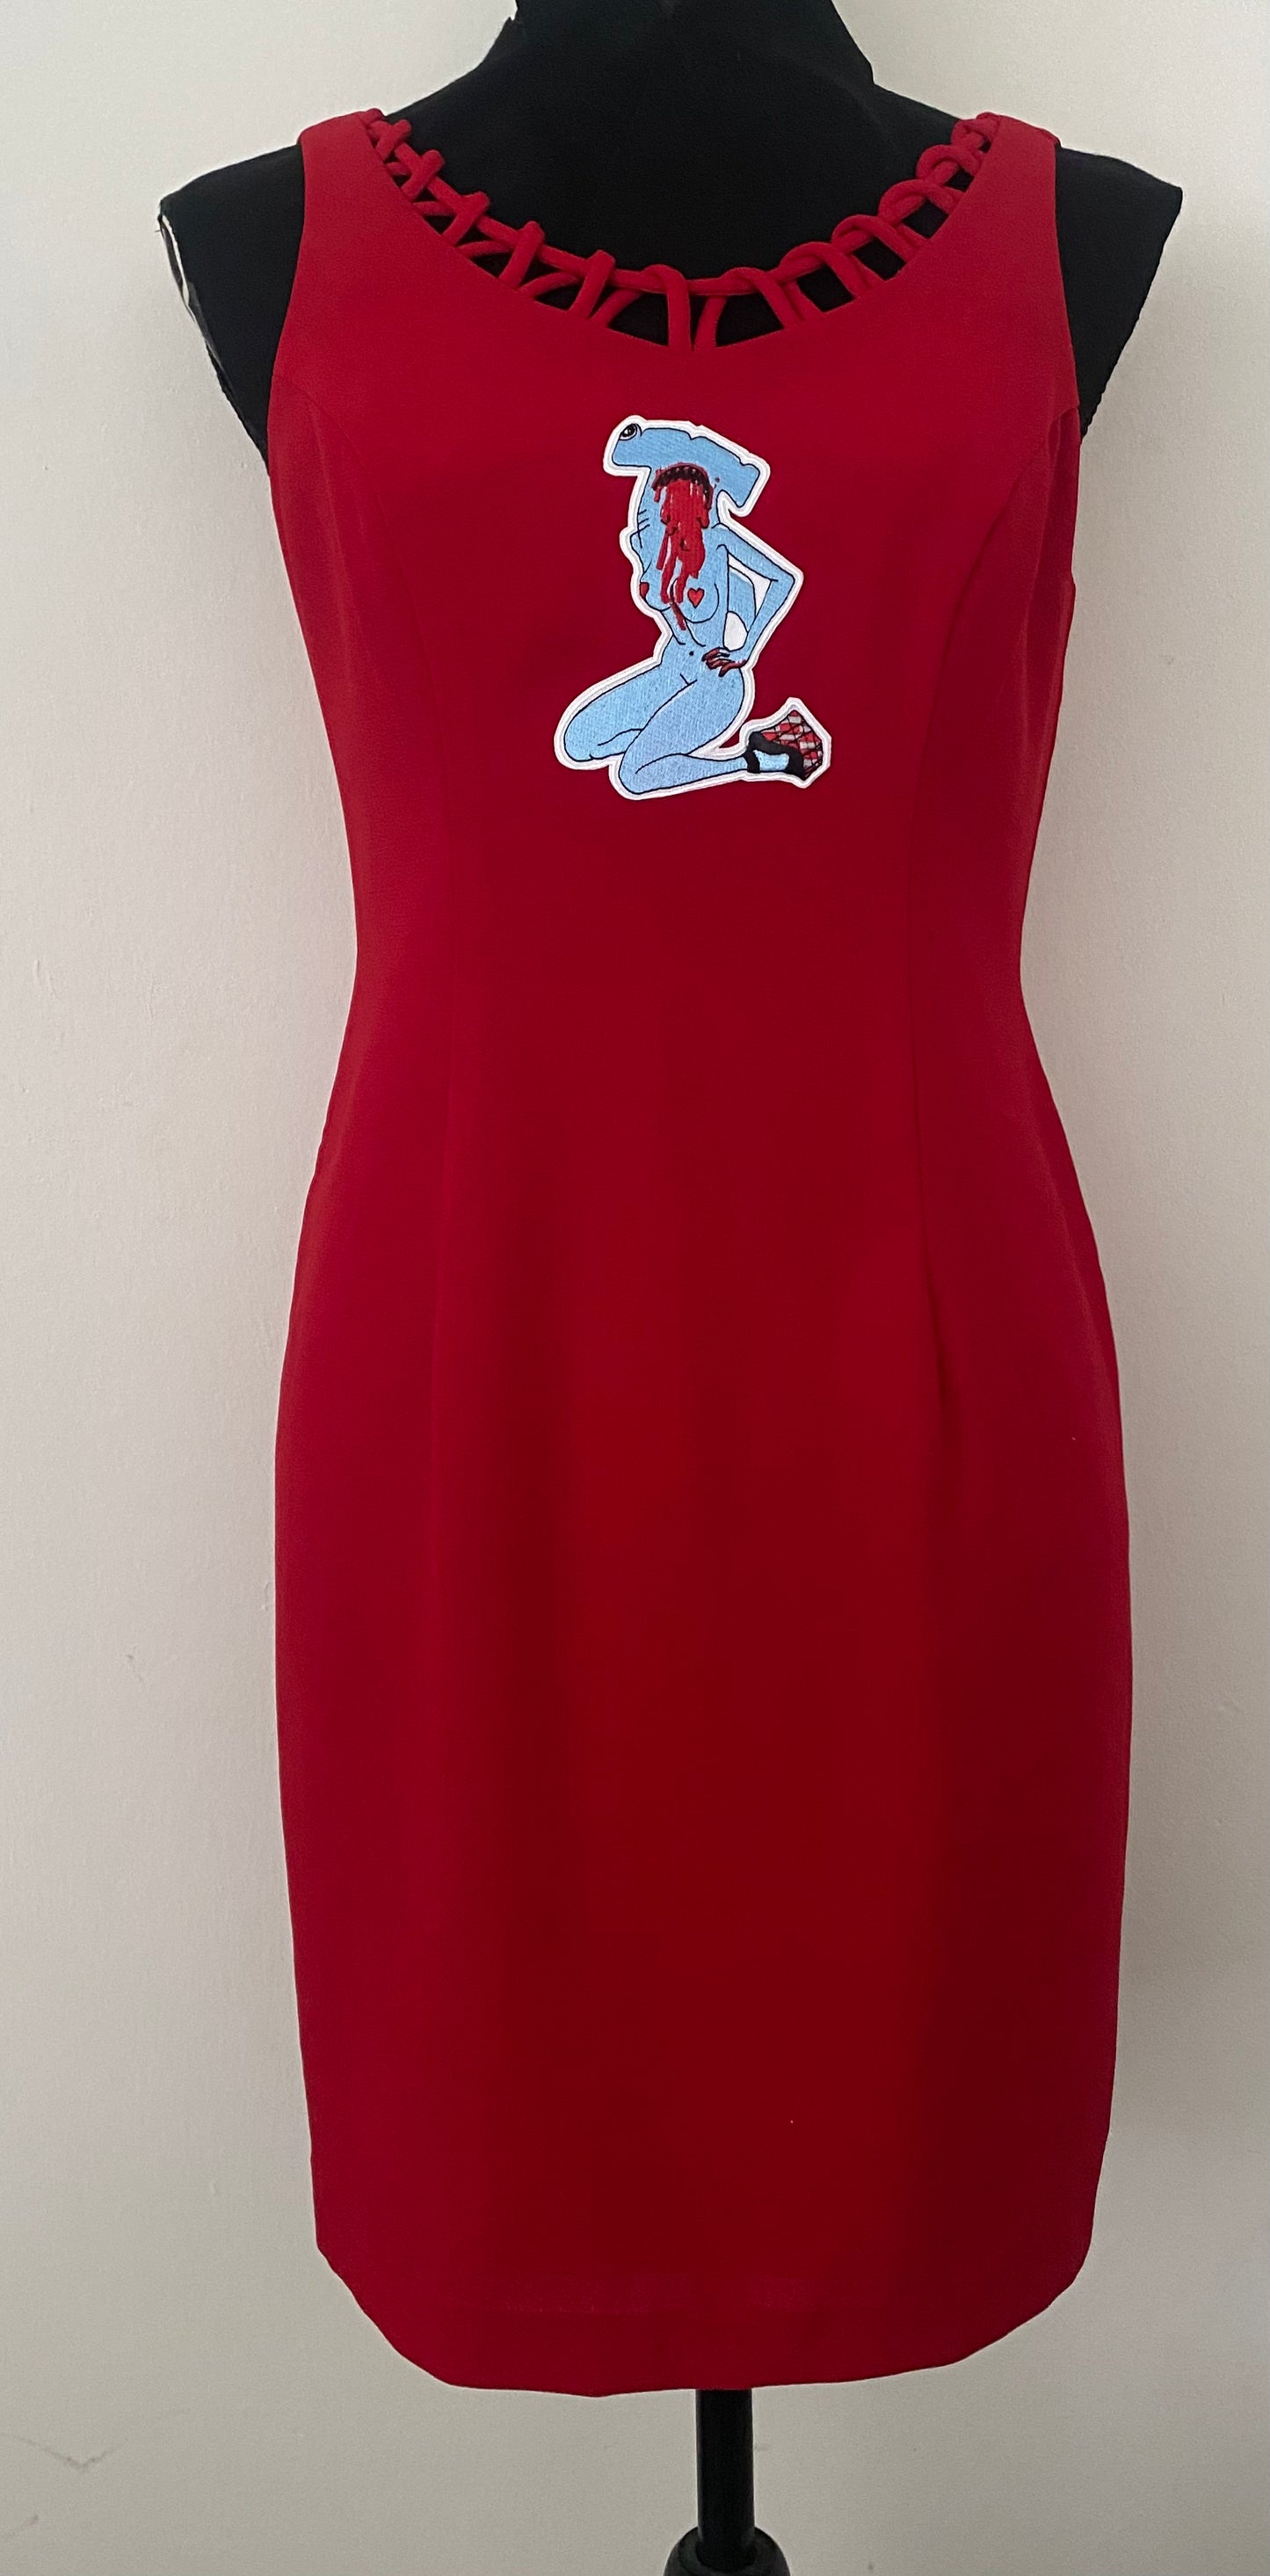 Shark Bait Red Dress